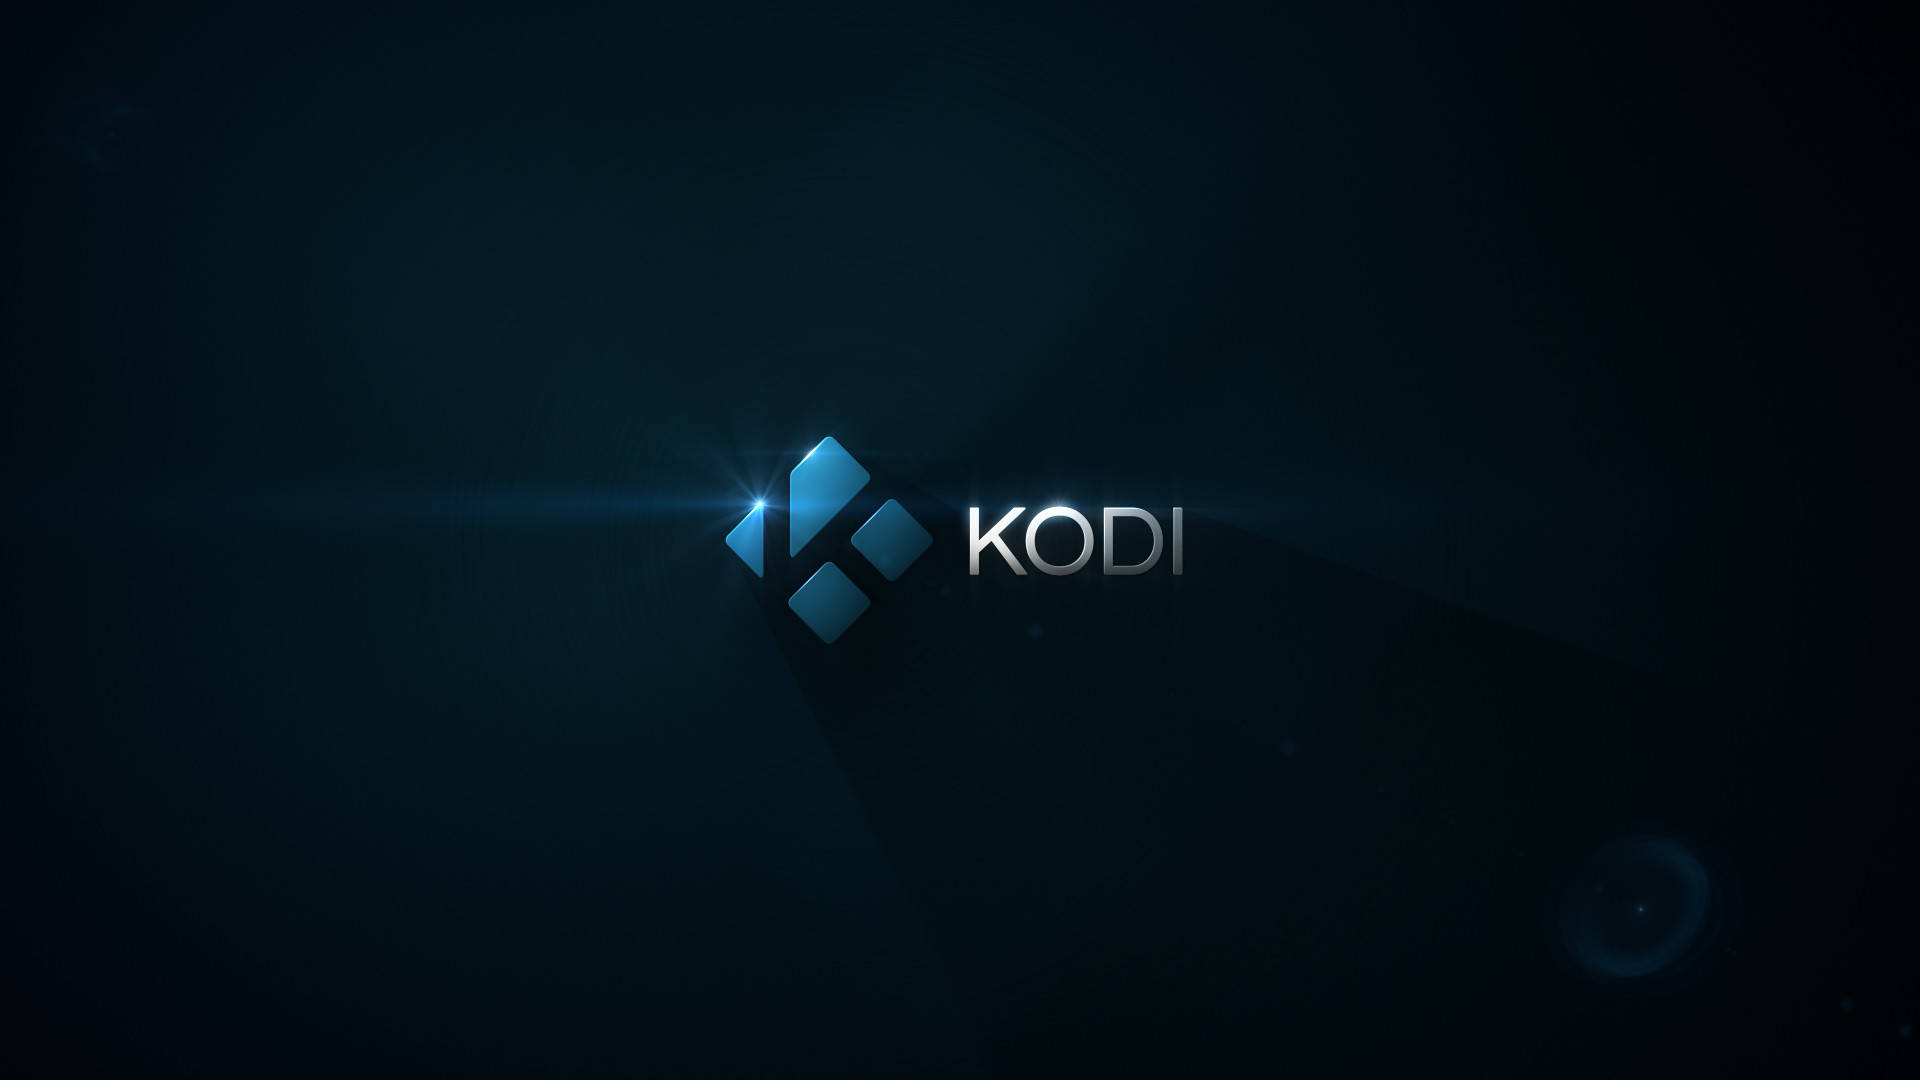 Shiny Kodi Logo Background